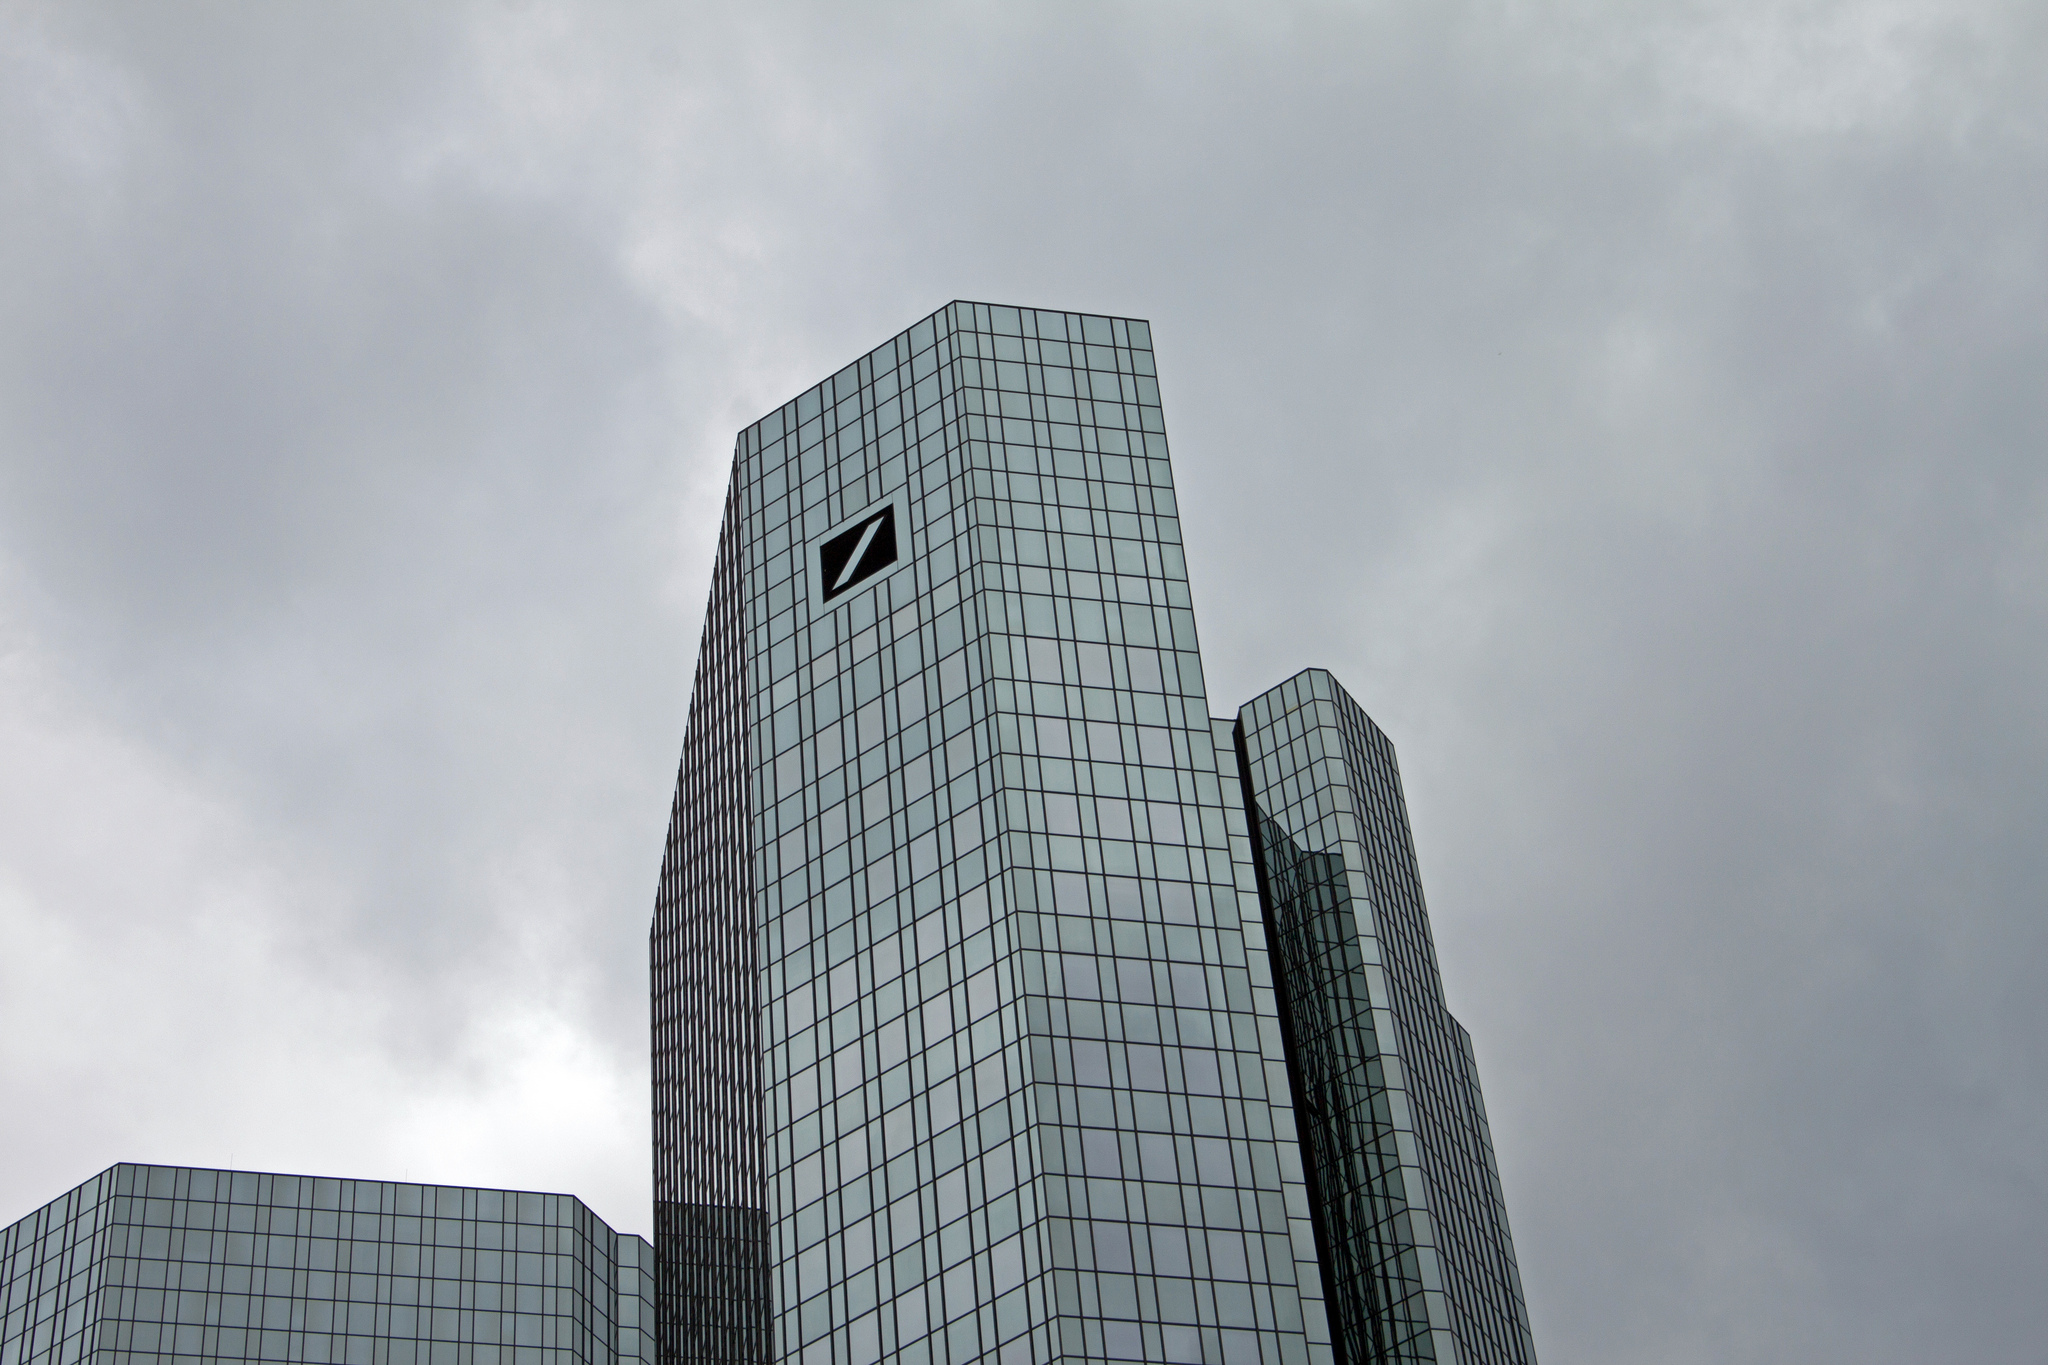 Spiegel: Η Deutsche Bank μειώνει τα μπόνους των υψηλόβαθμων στελεχών κατά 90%